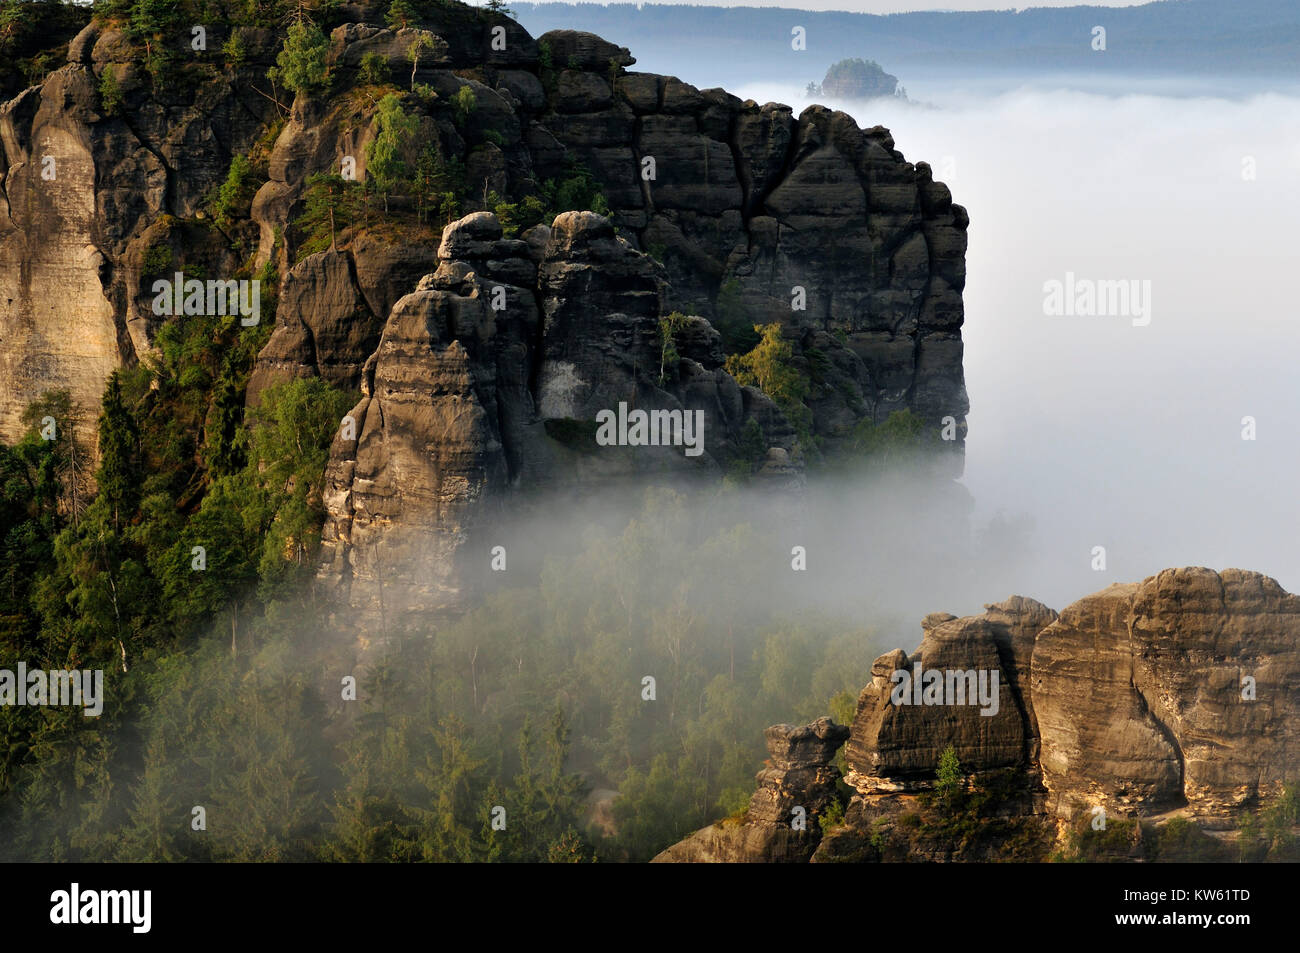 Elbsandsteingebirge, summit, peak, rock, rock, rocky, rocky, rushing stone, rock scenery, sandstone, sandstone rock, Elbsandstein, nature, nature, nat Stock Photo